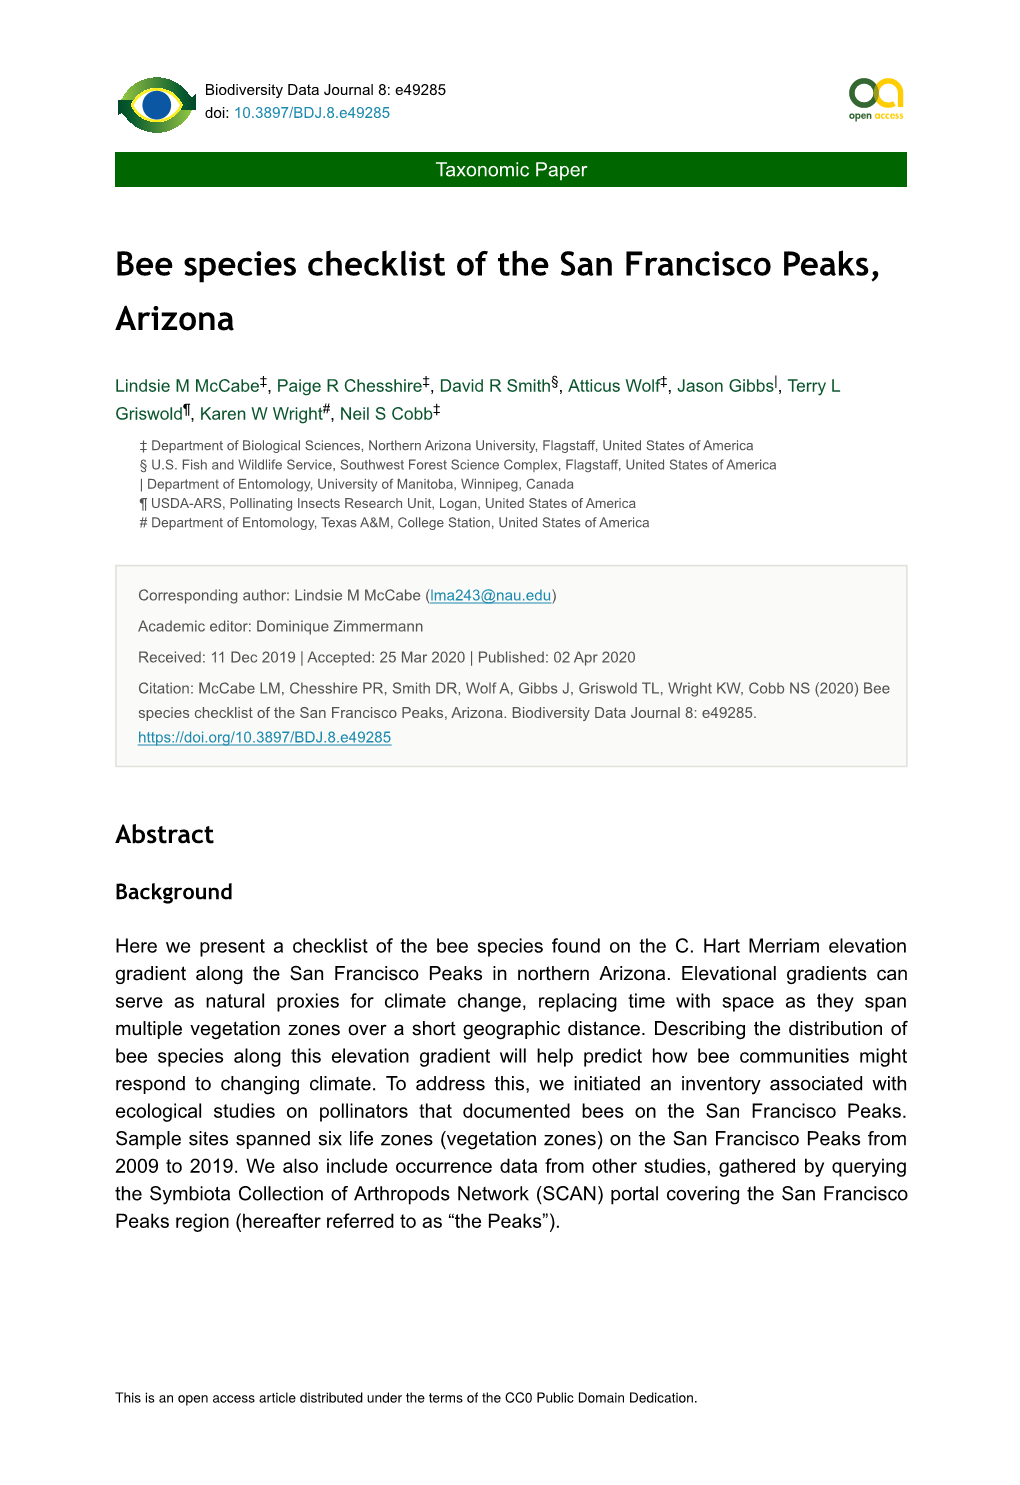 Bee Species Checklist of the San Francisco Peaks, Arizona